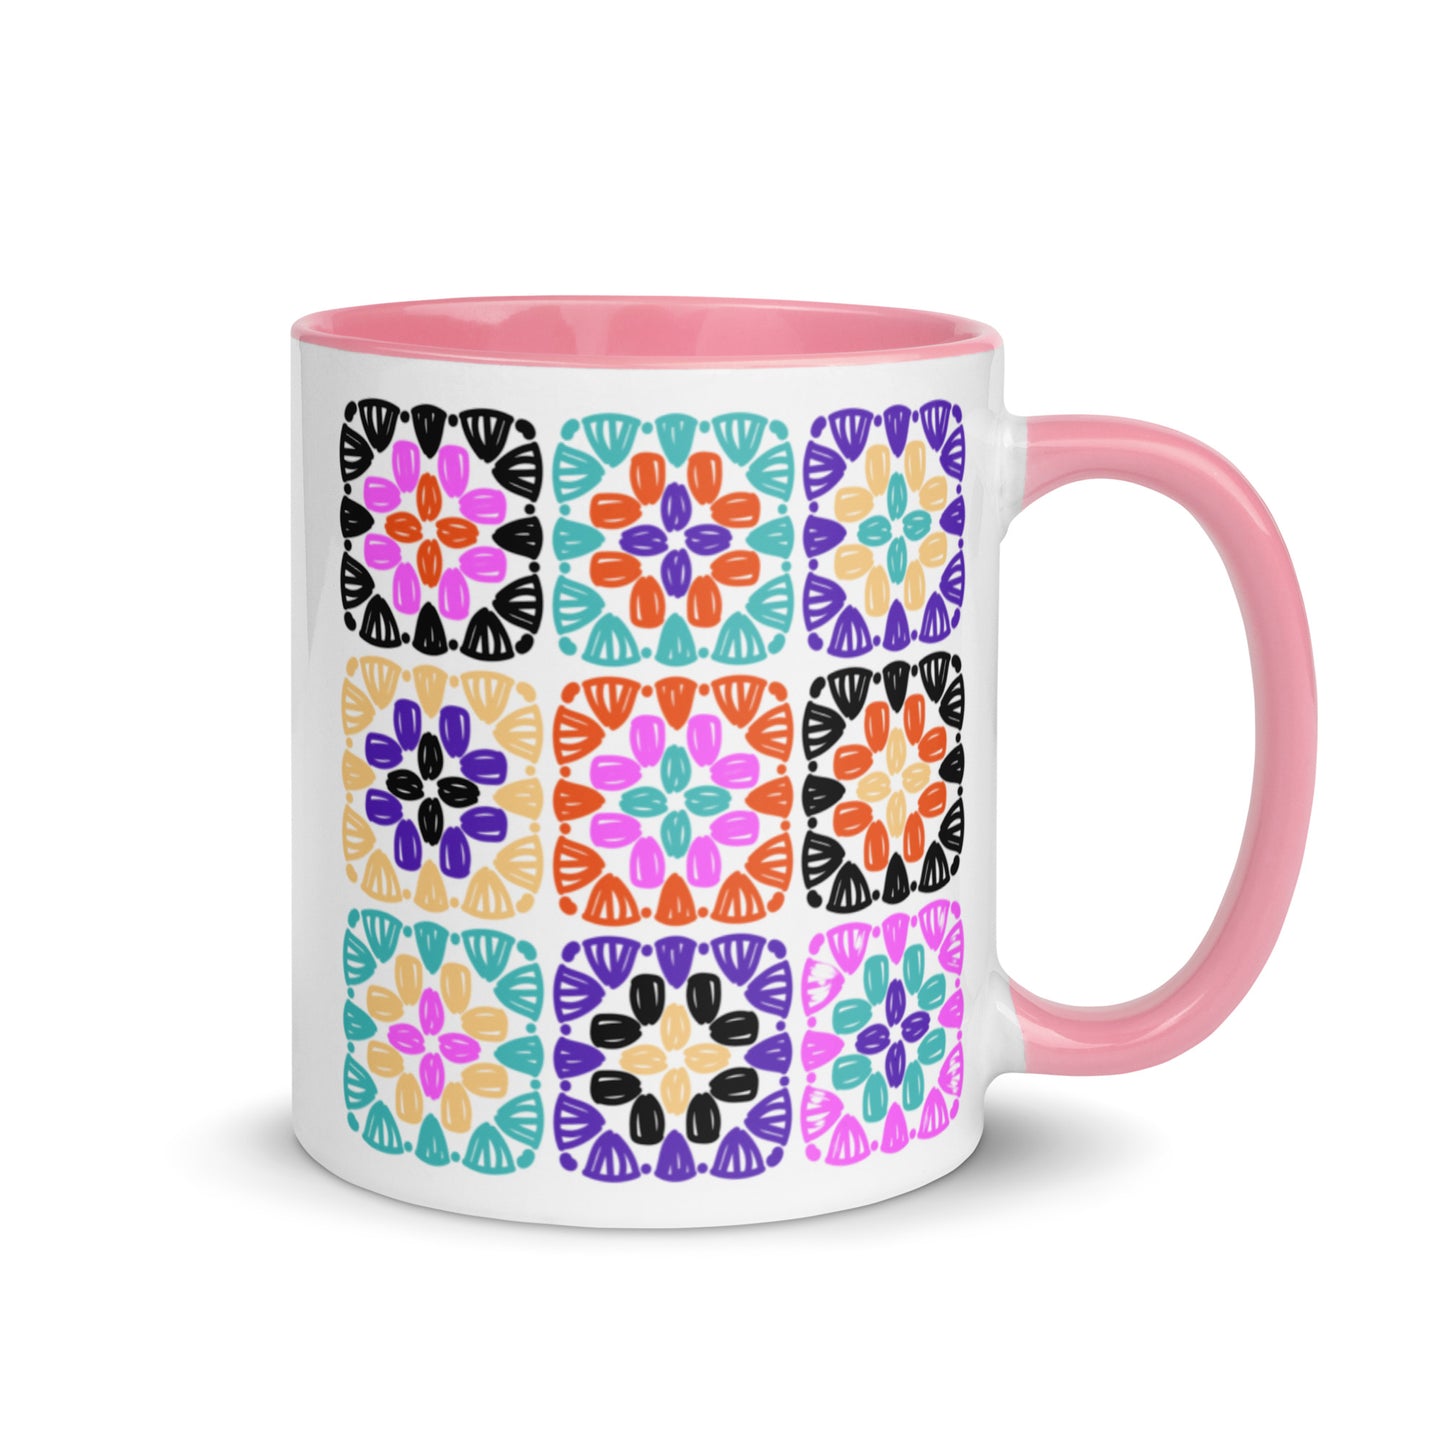 The Granny Square Crochet Mug